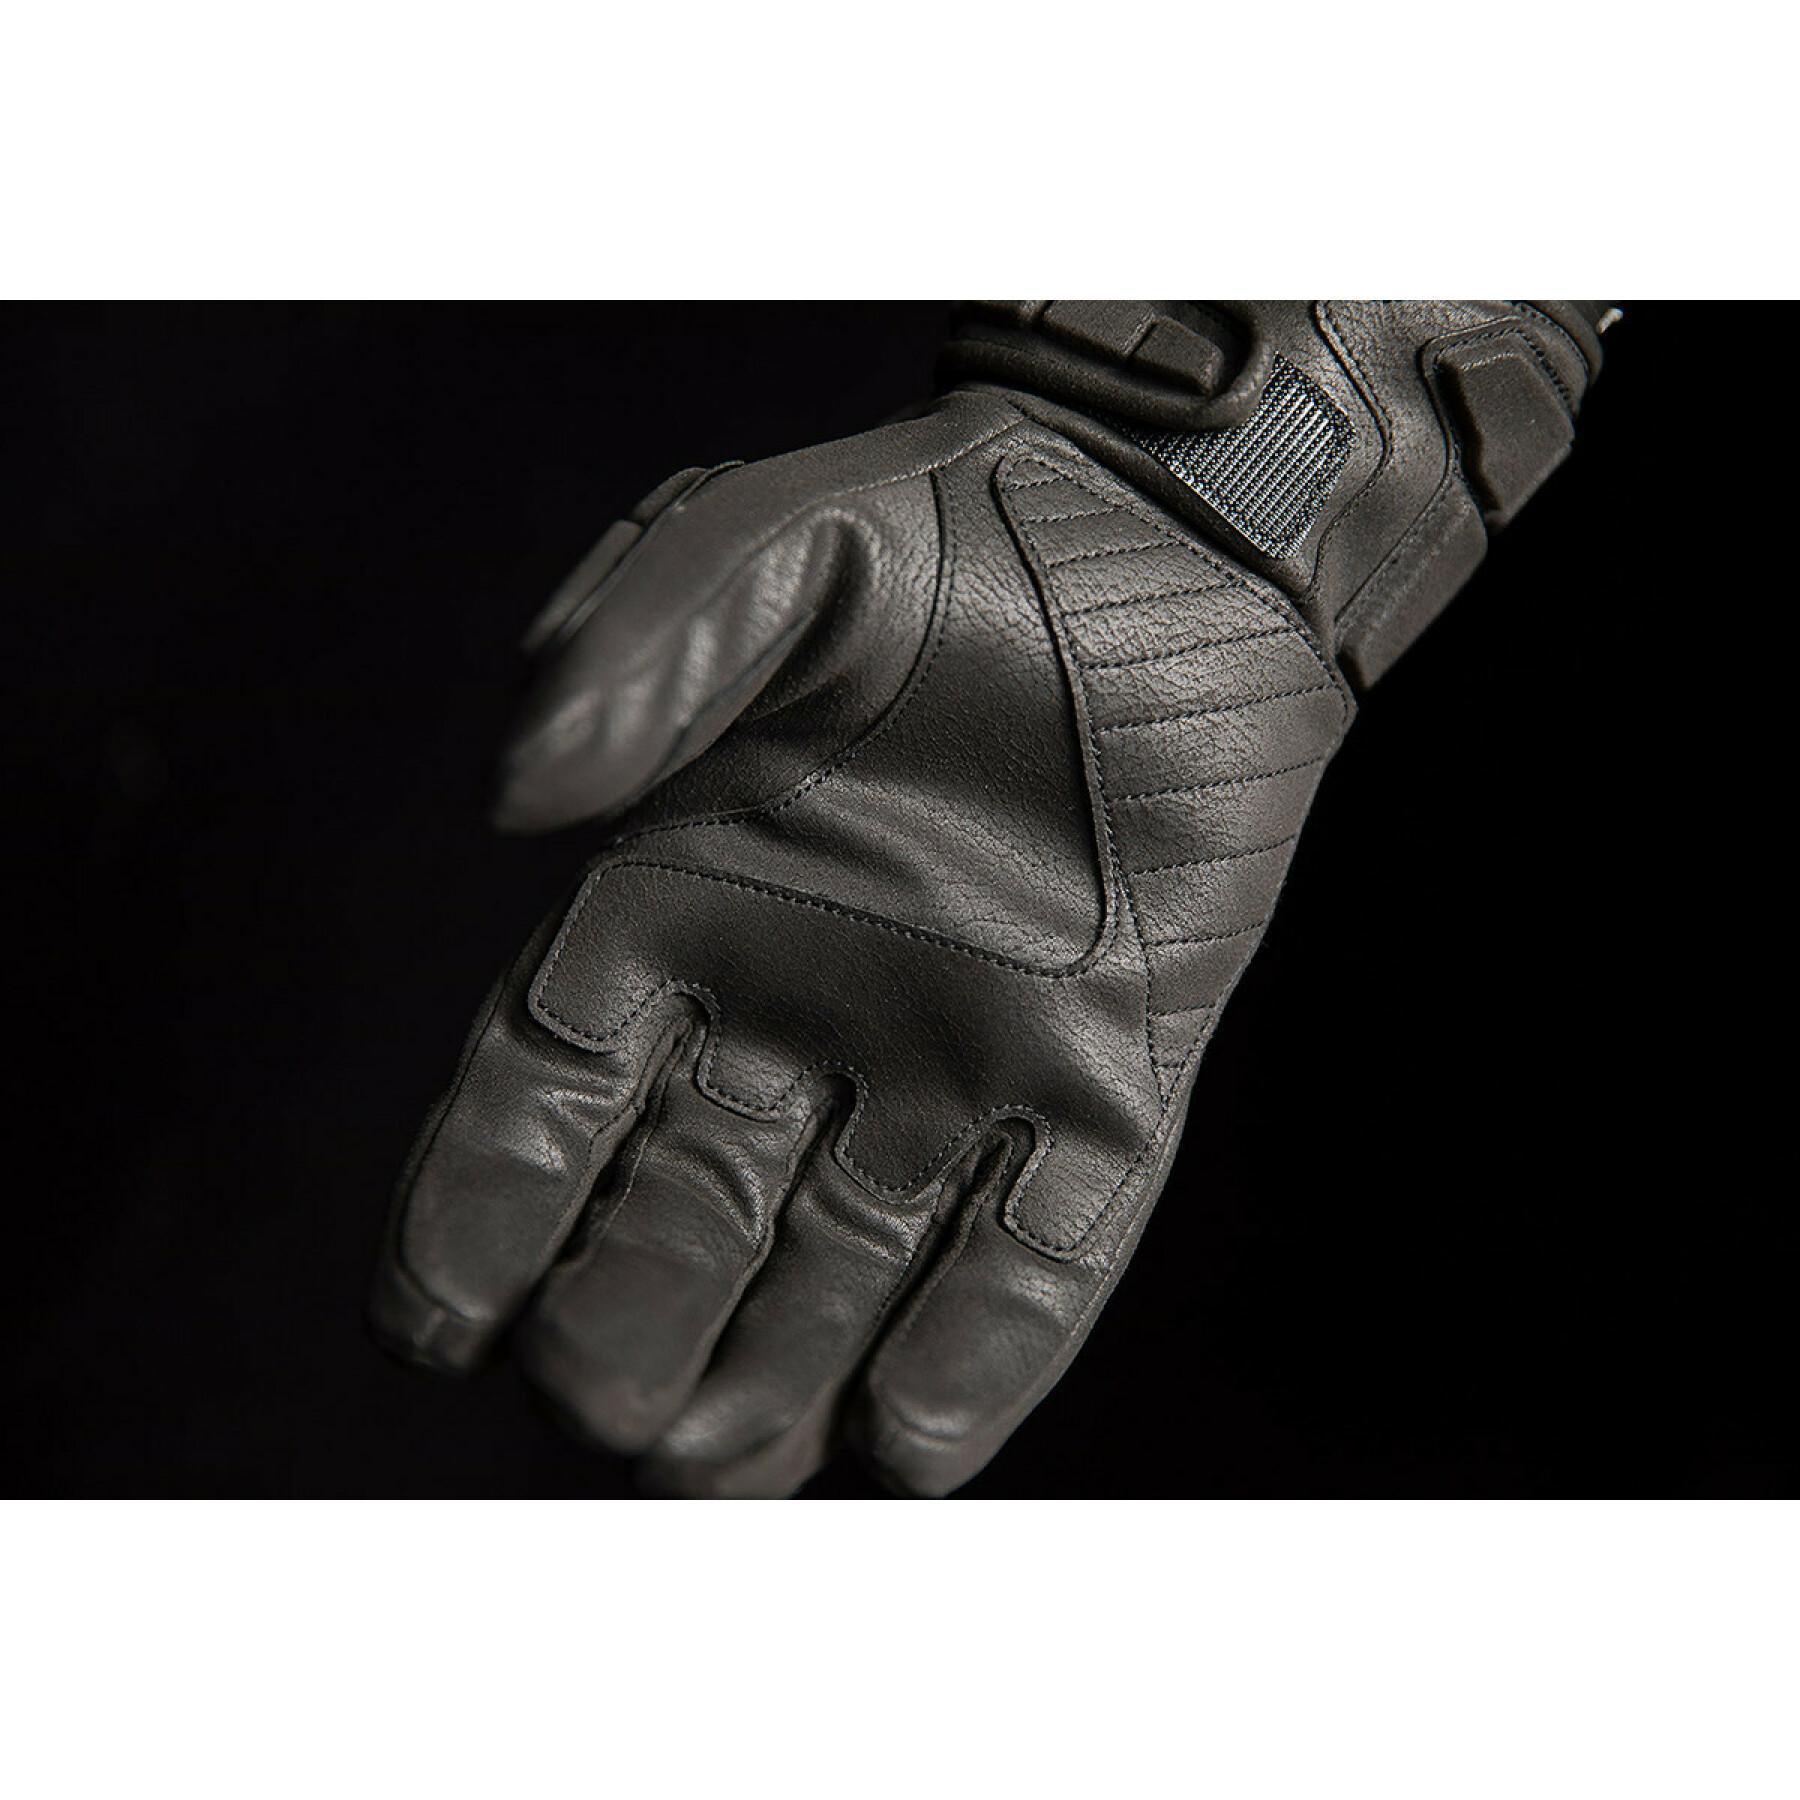 Women's mid-season gloves Iconrhead 3 CE